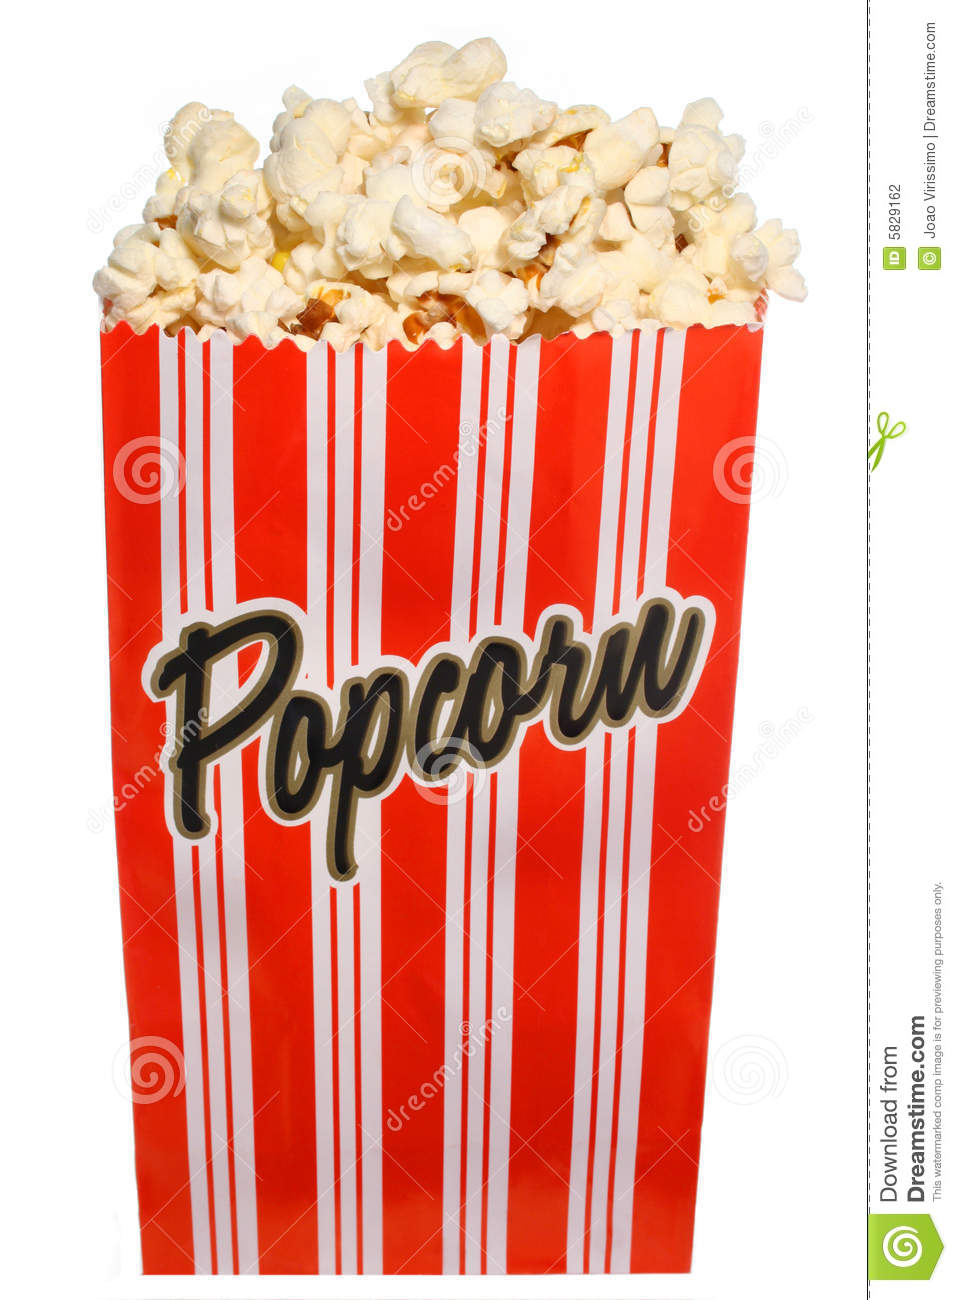 popcorn time download 3.2.2